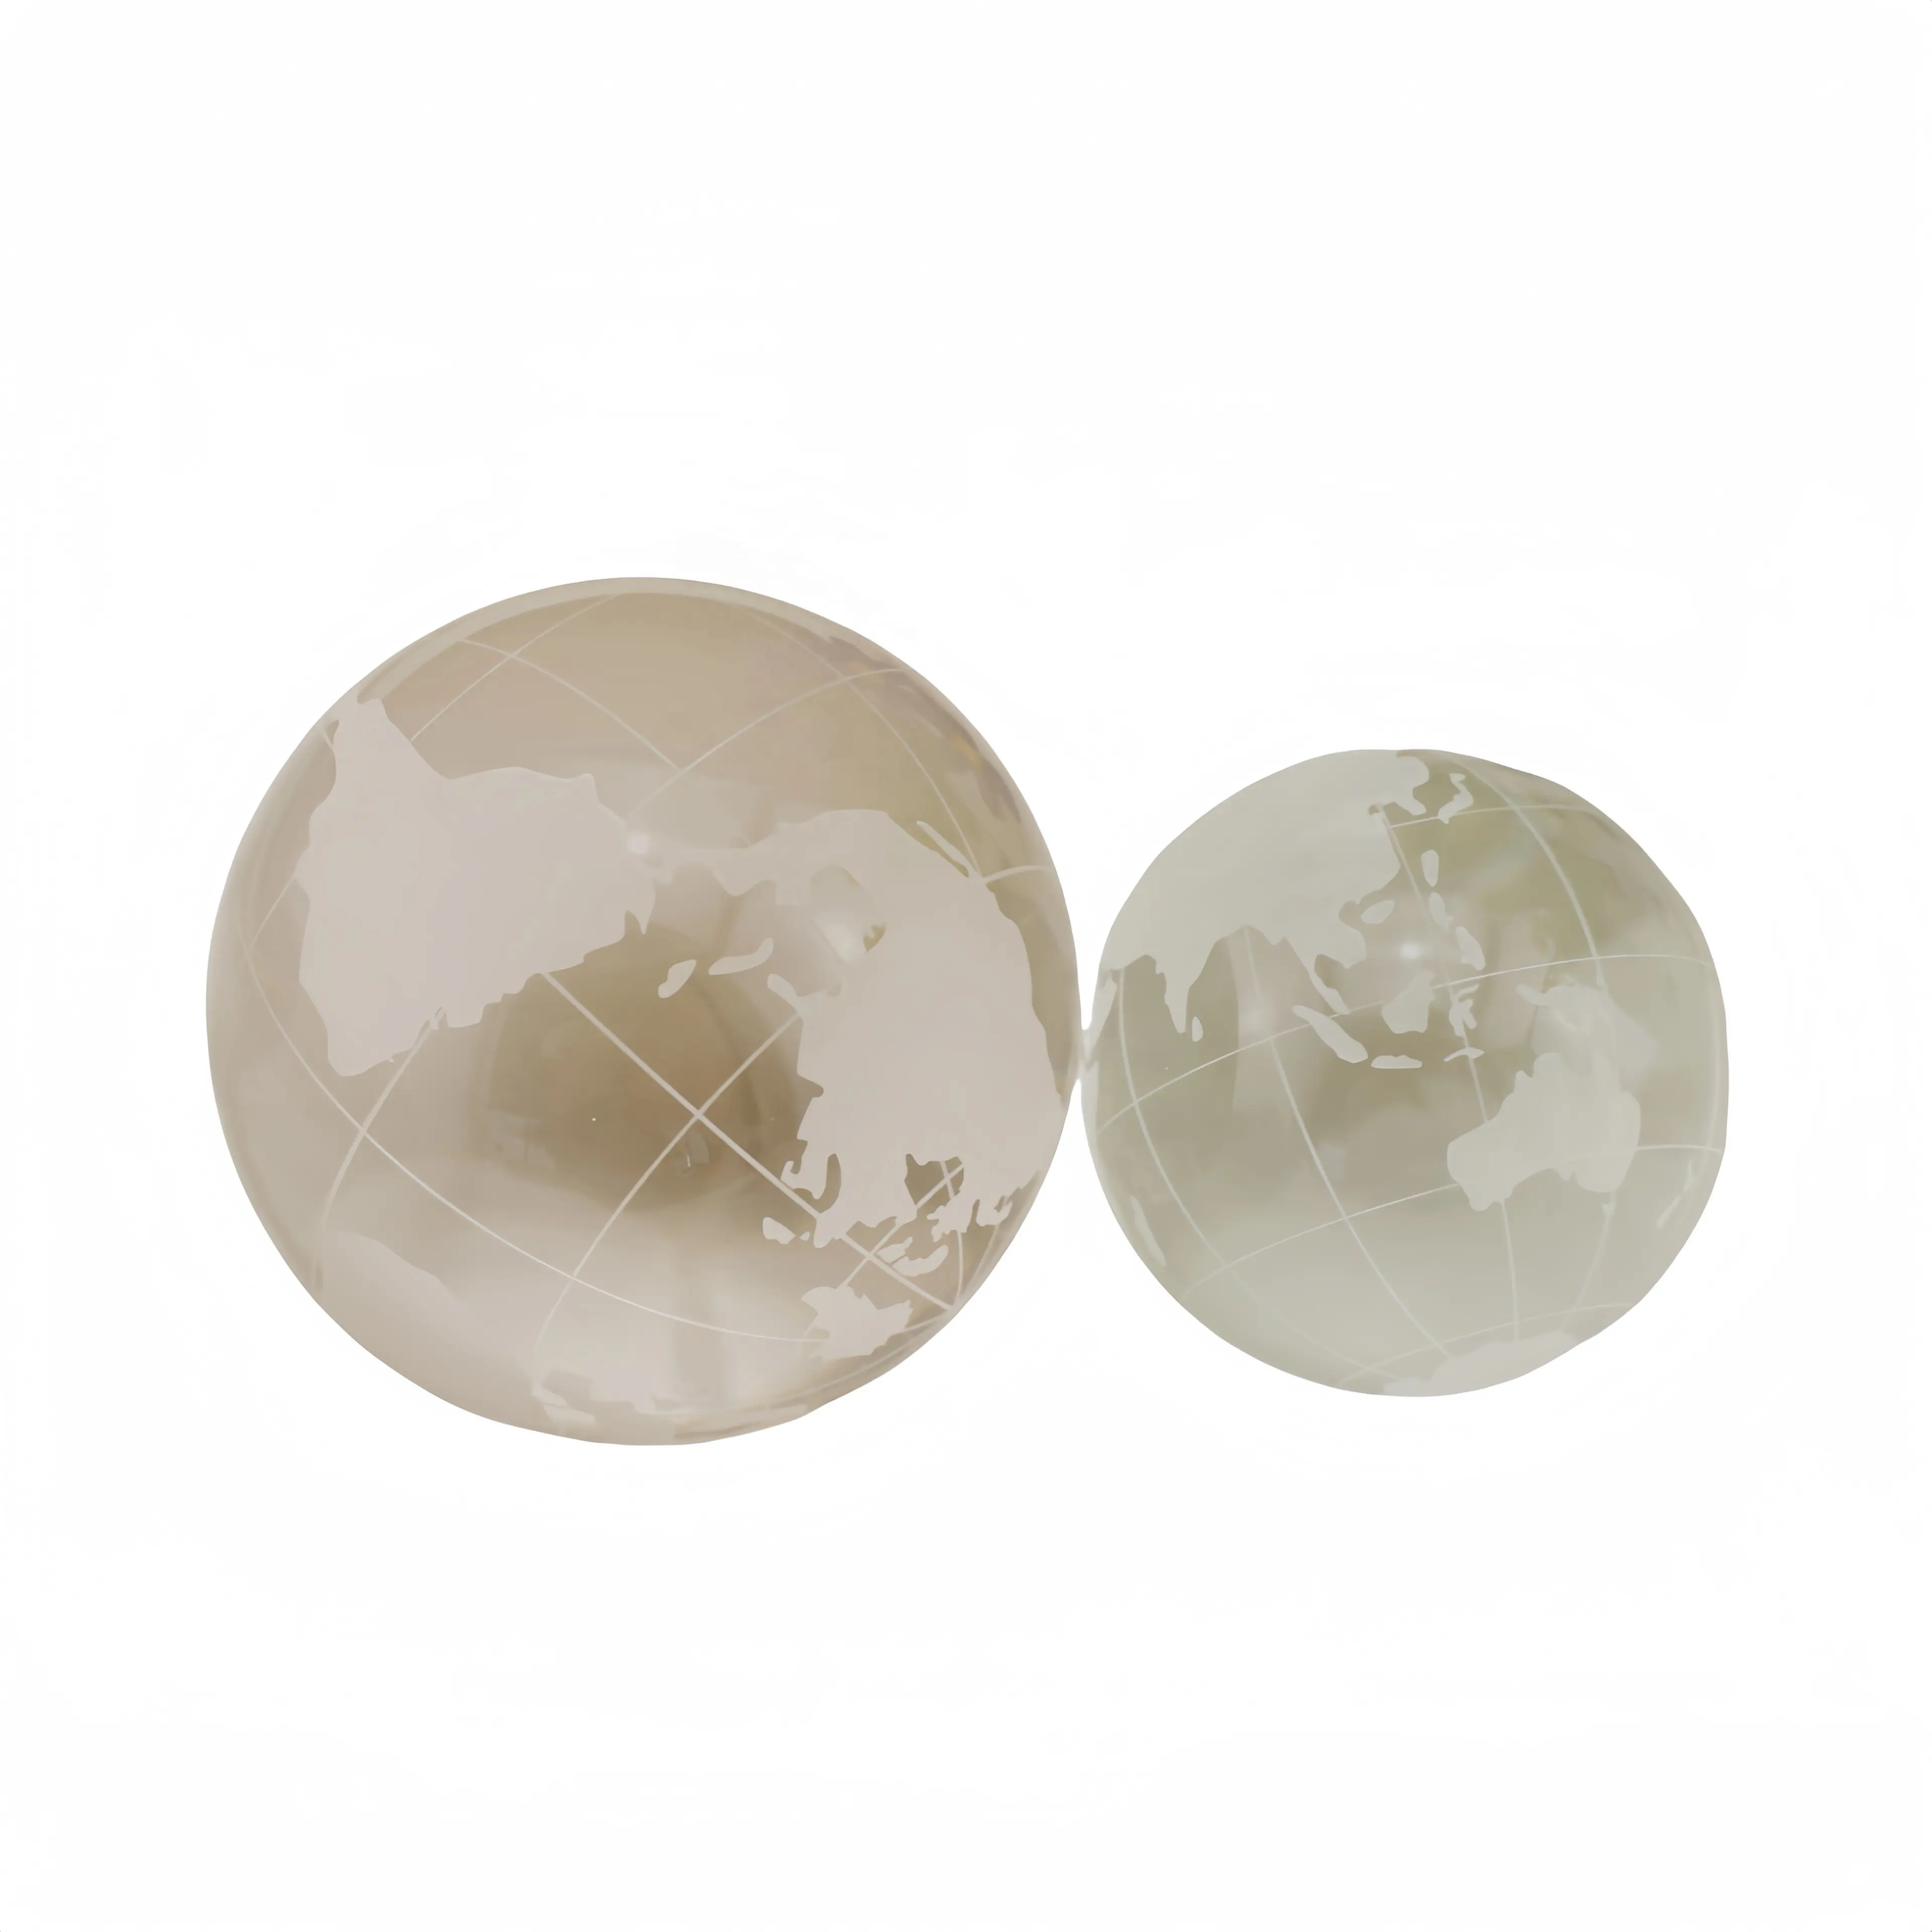 World Map Engraved Crystal Ball Paperweight, Sandblasting Crystal Globe Award für Business Gifts, Crystal World Globe mit stand